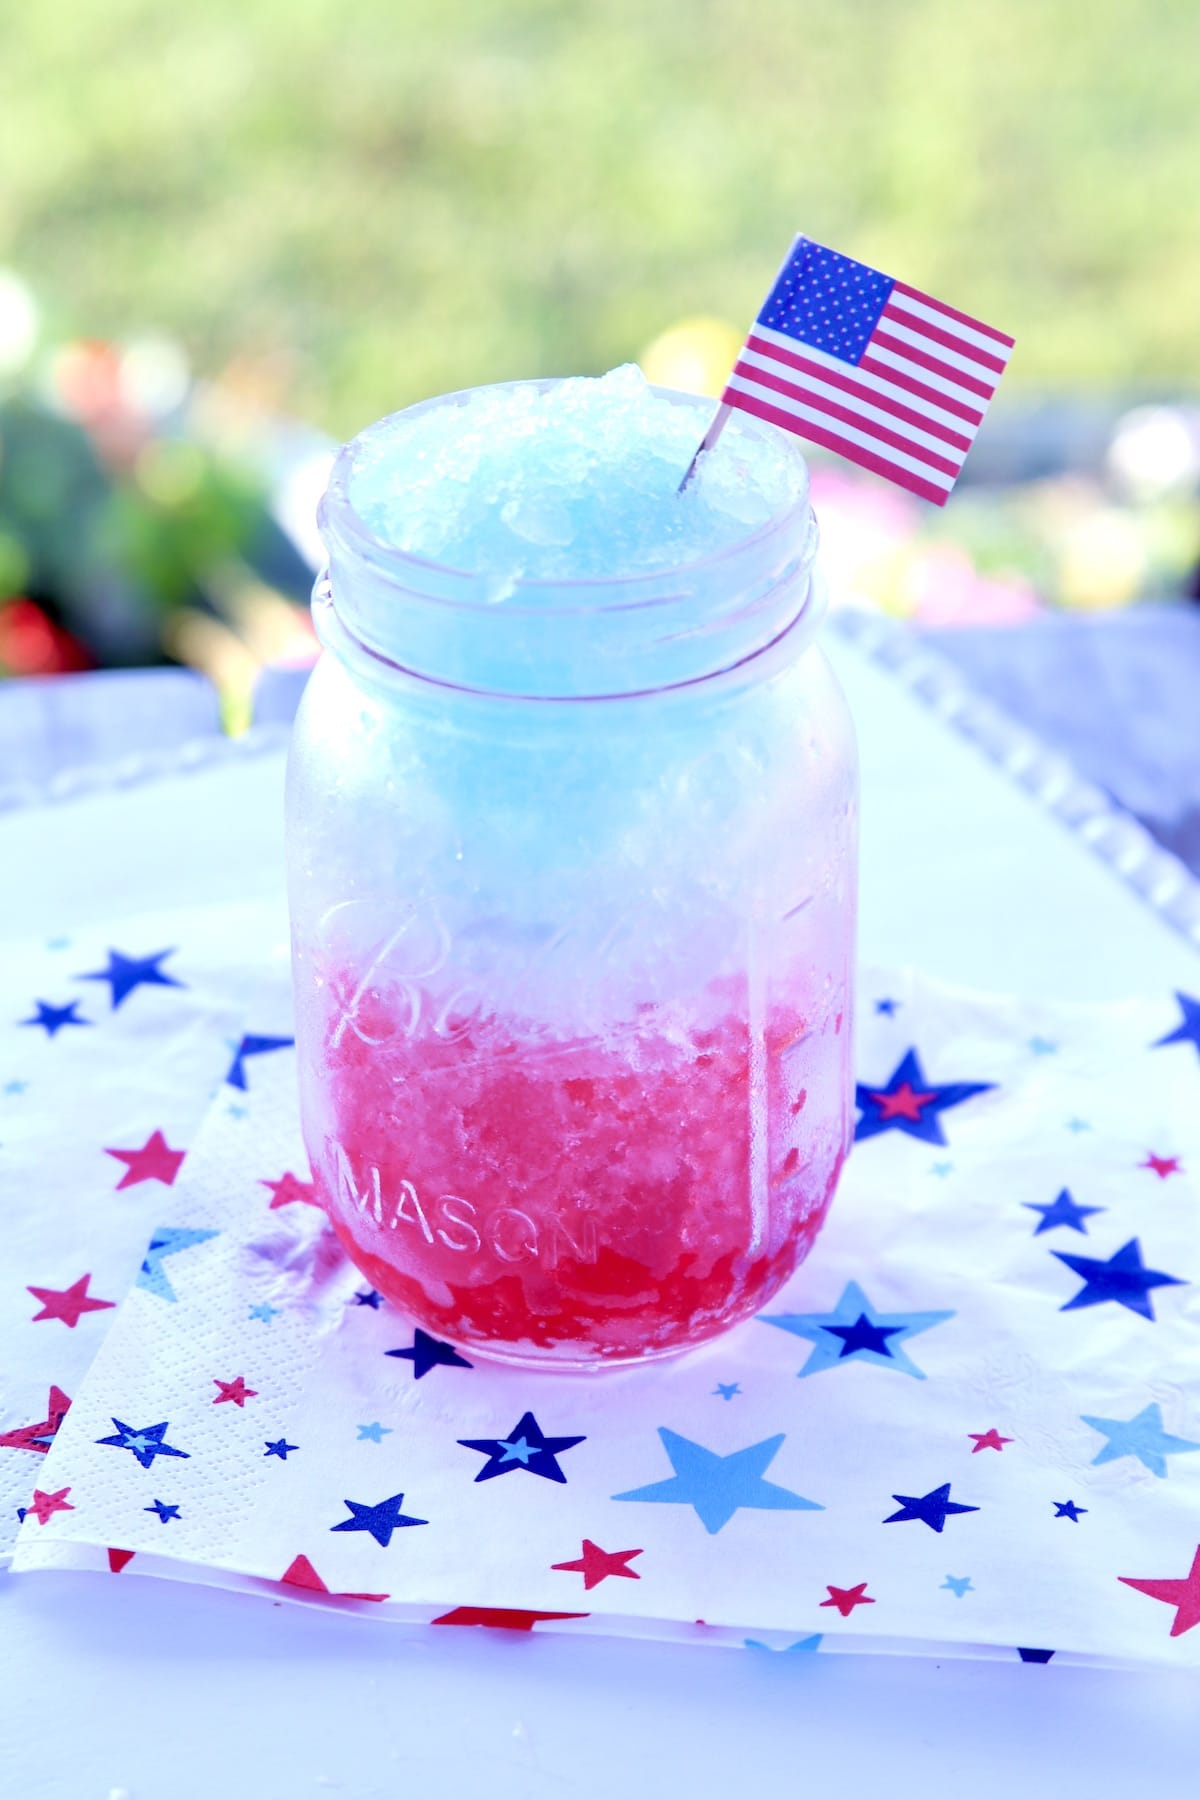 Red white and blue slush in a mason jar. American flag garnish.